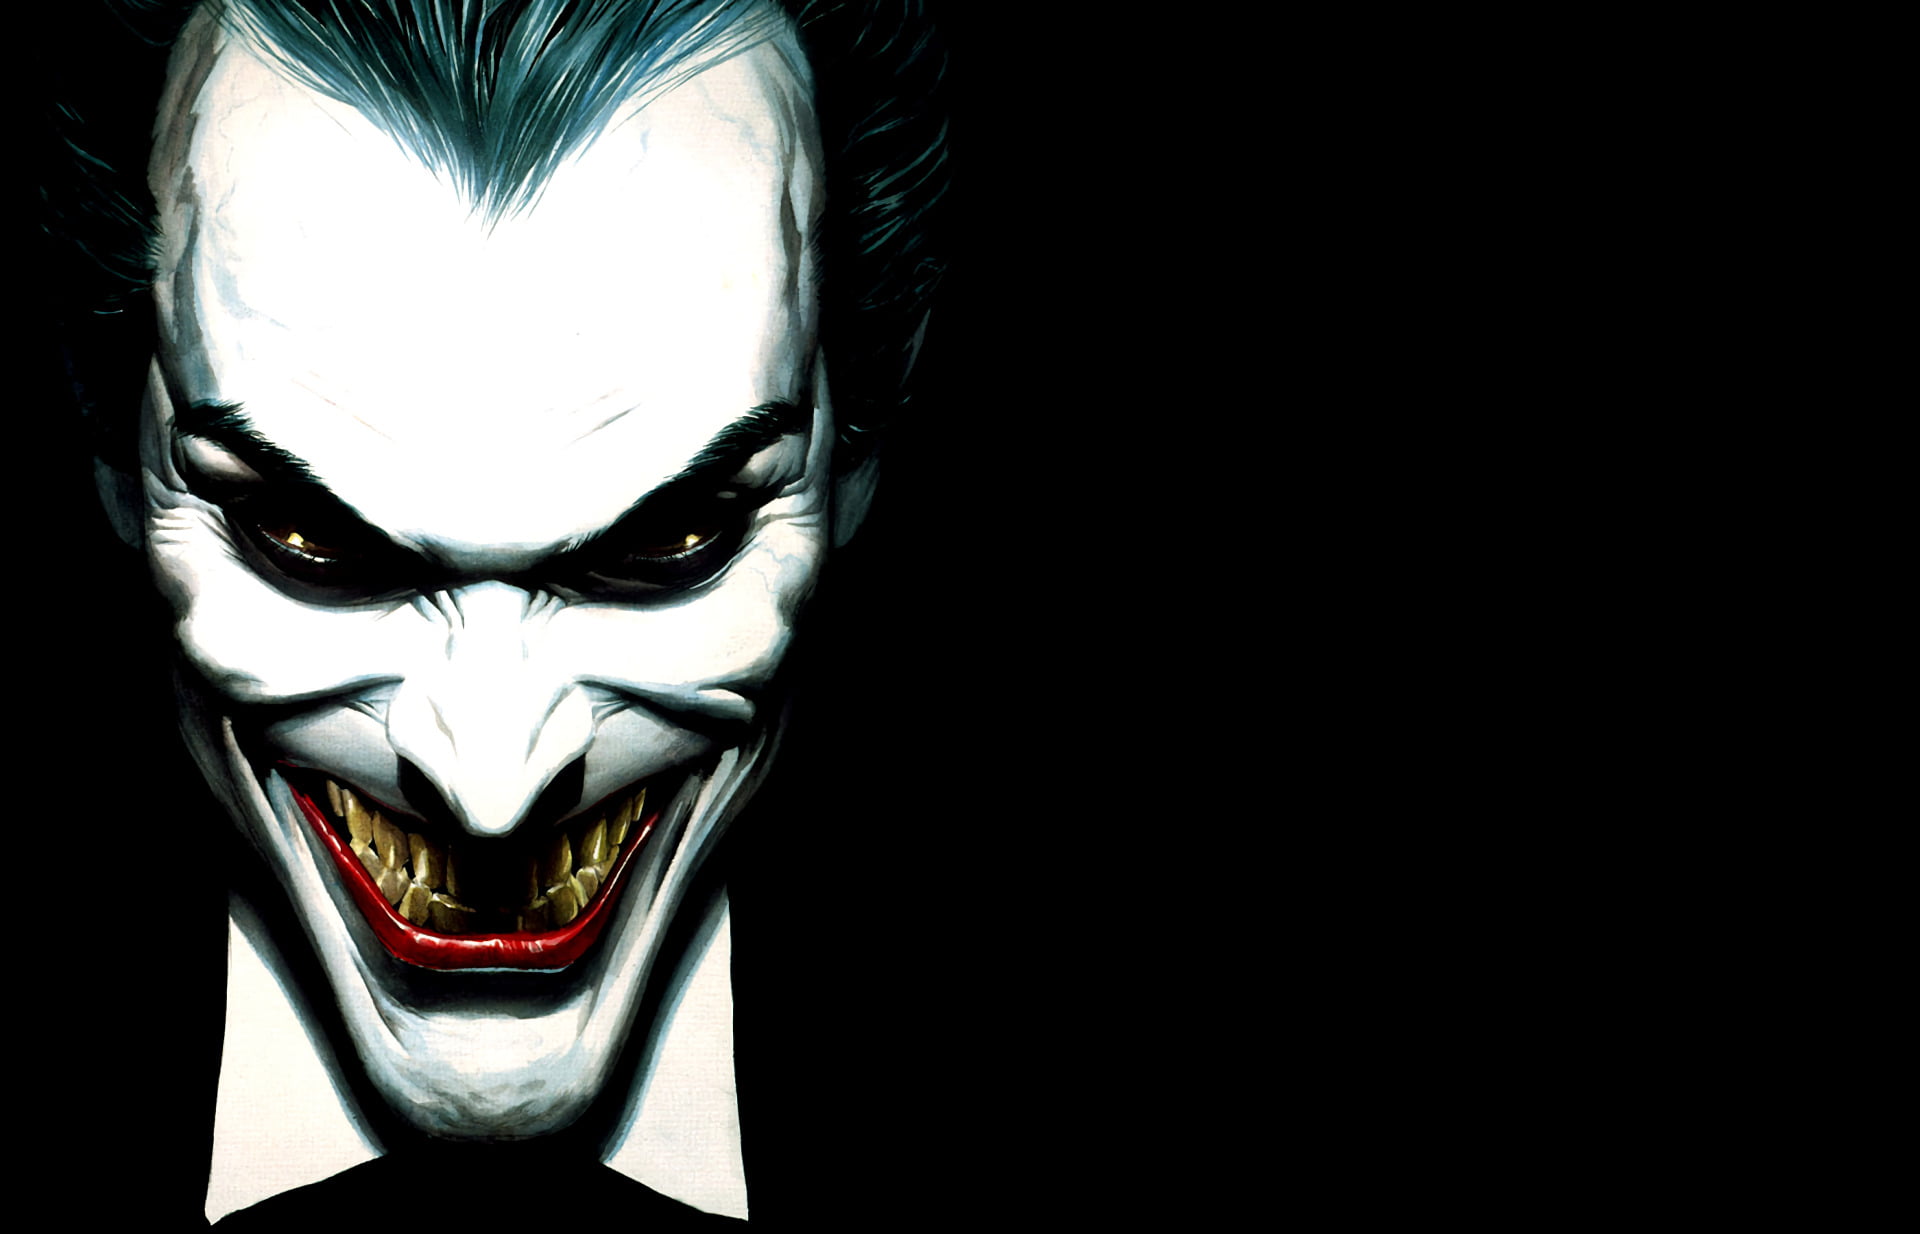 The Joker, Comics, mask - Disguise, human Face, halloween, black Color